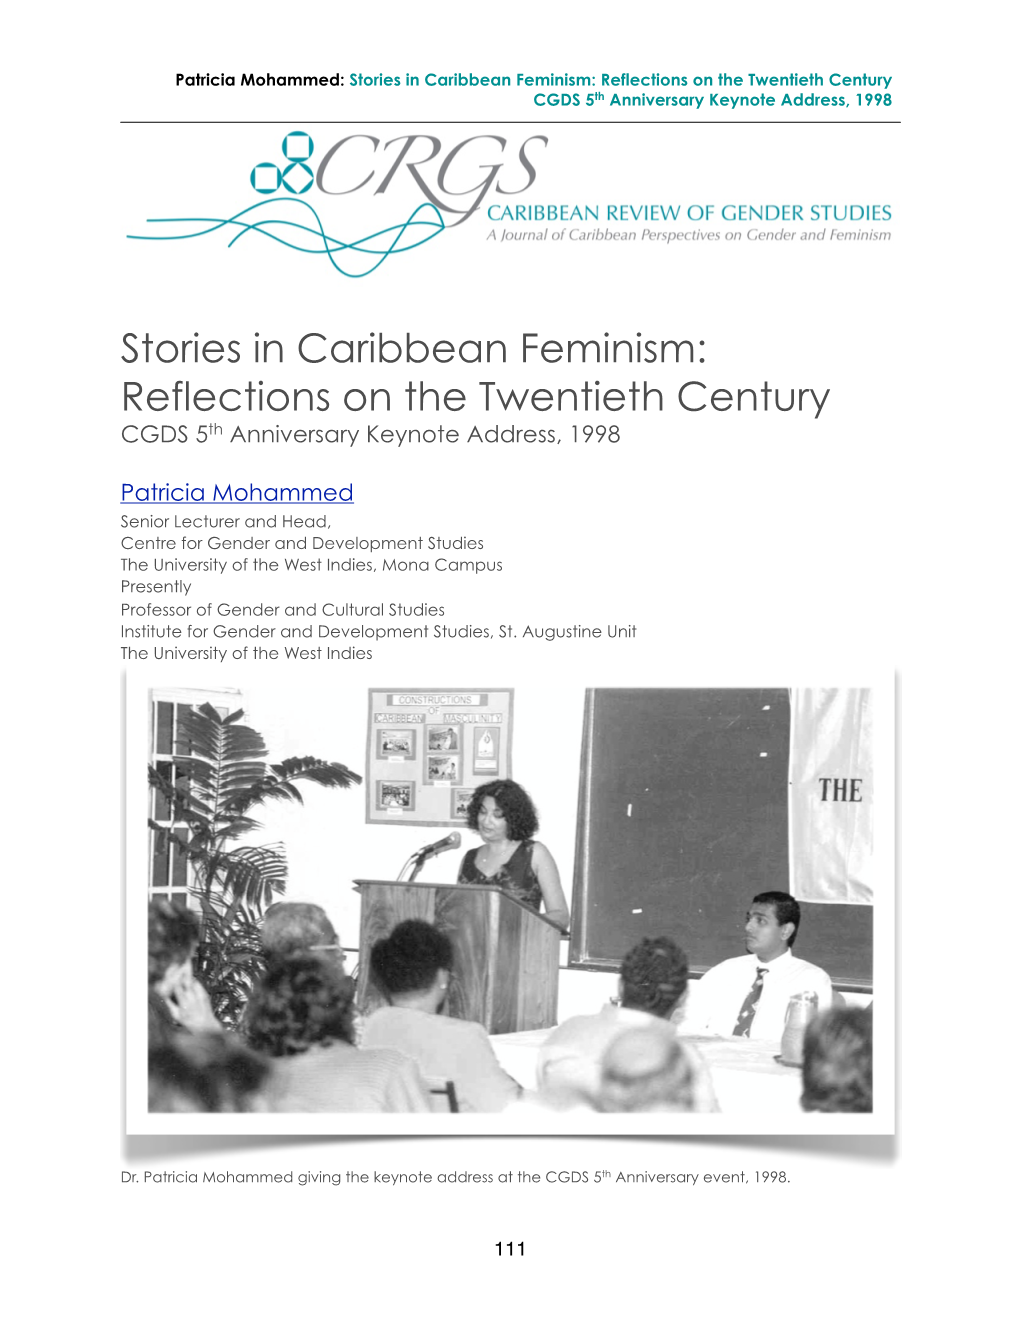 Stories in Caribbean Feminism: Reflections on the Twentieth Century CGDS 5Th Anniversary Keynote Address, 1998